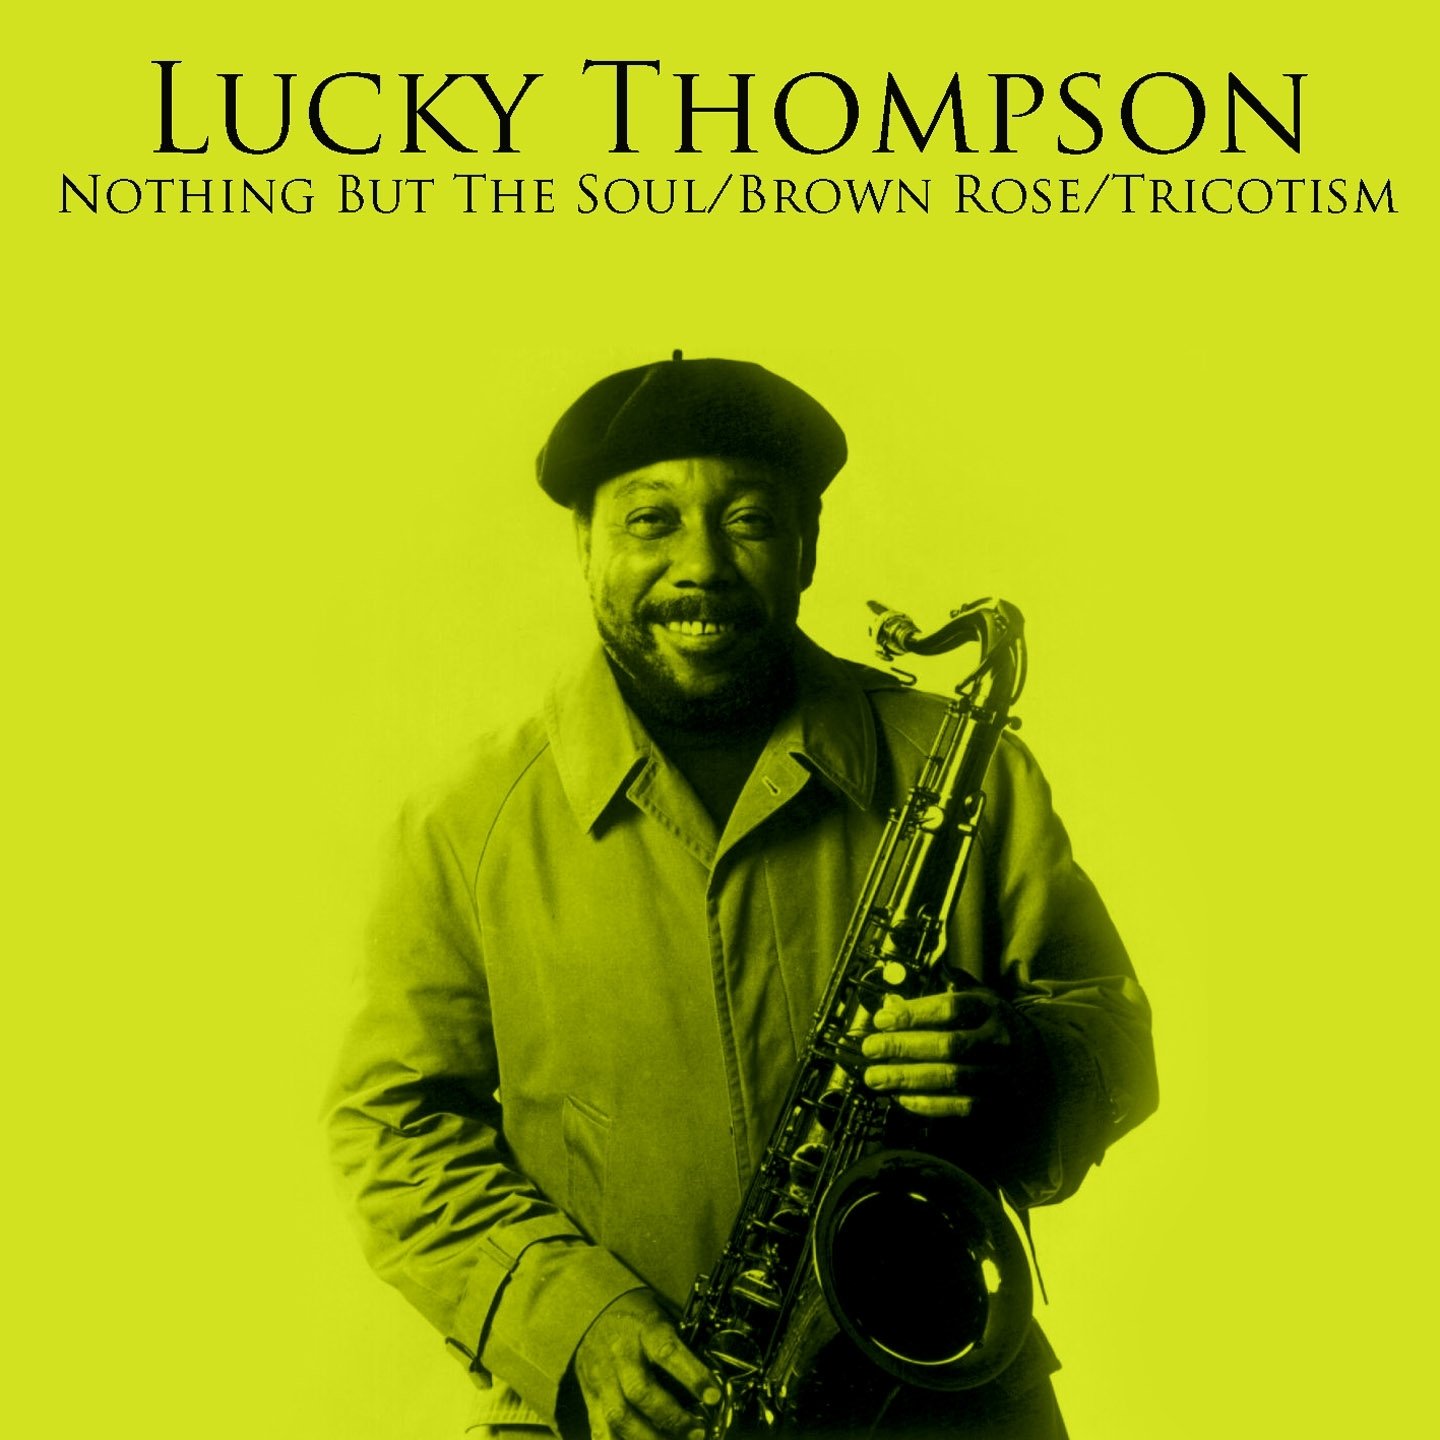 Lucky things. Lucky Thompson. Lucky исполнитель. Tony Thompson певец. Lucky Thompson КБ.